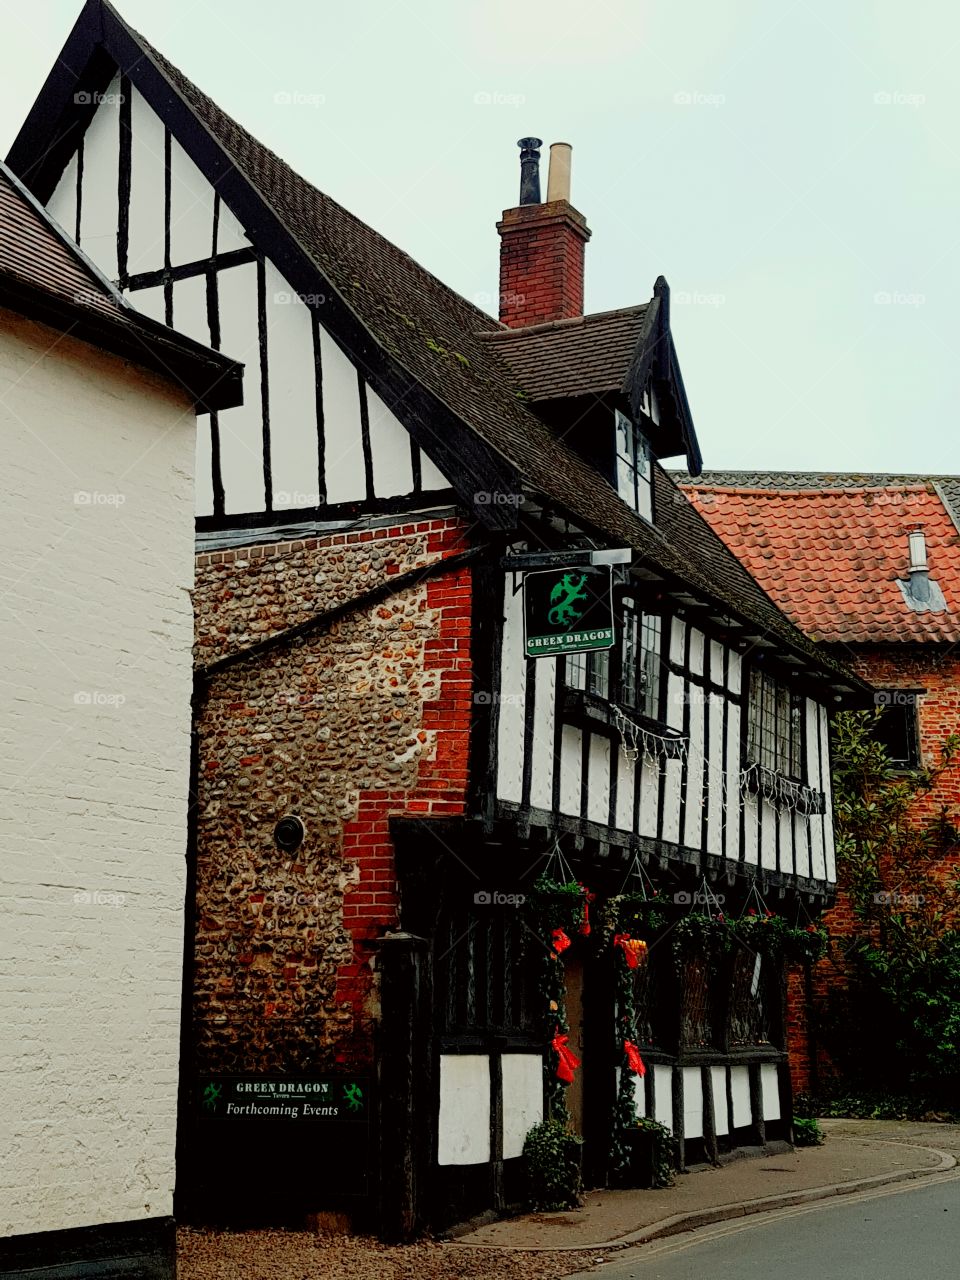 The Green Dragon Pub whymondham tudor house